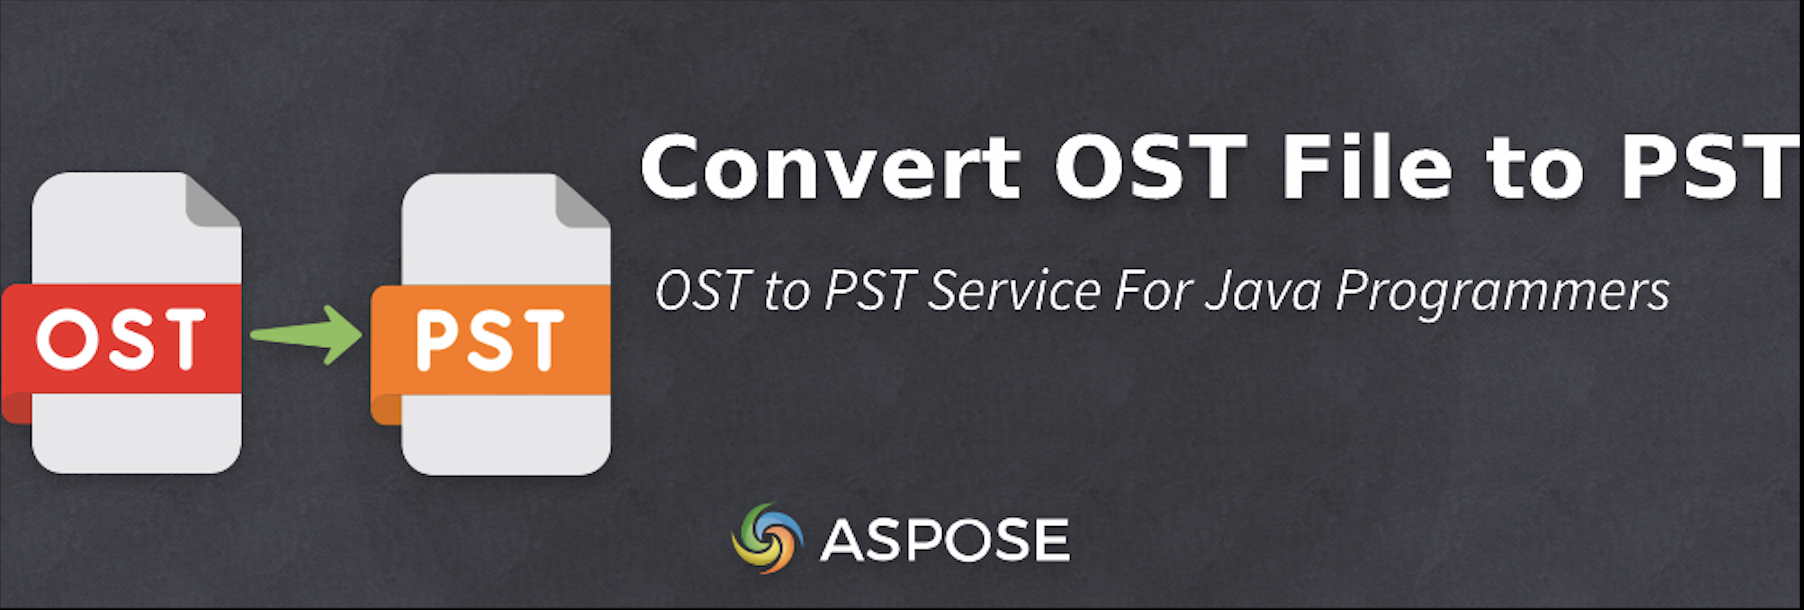 Converti file OST in PST in Java: convertitore gratuito da OST a PST